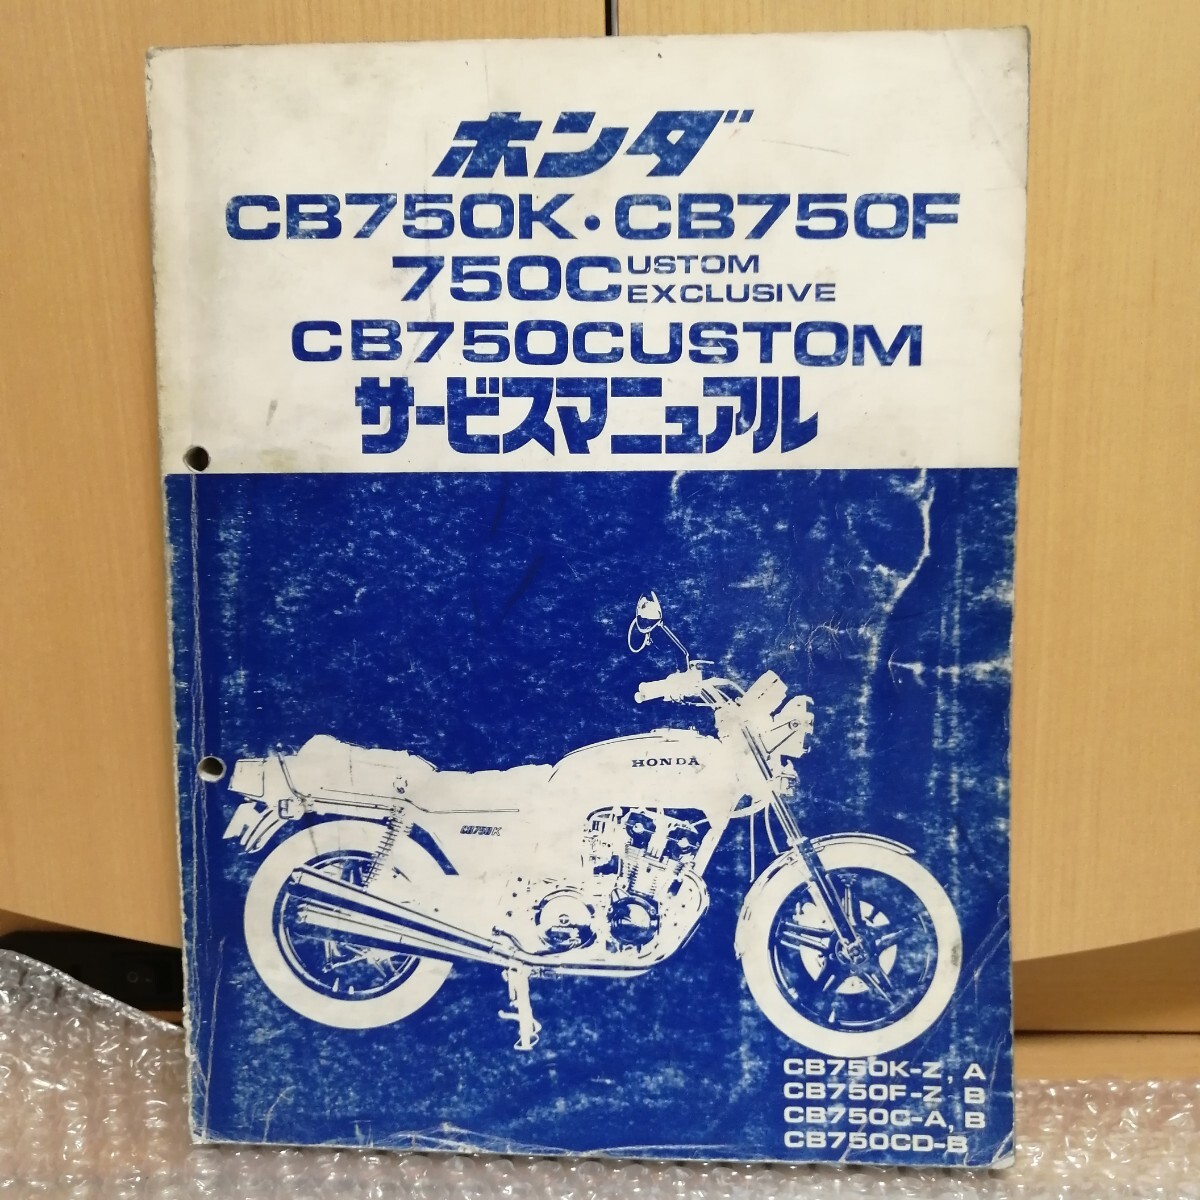  Honda CB750K CB750F CB750 custom exclusive service manual RC01/RC04 maintenance restore overhaul service book 5830